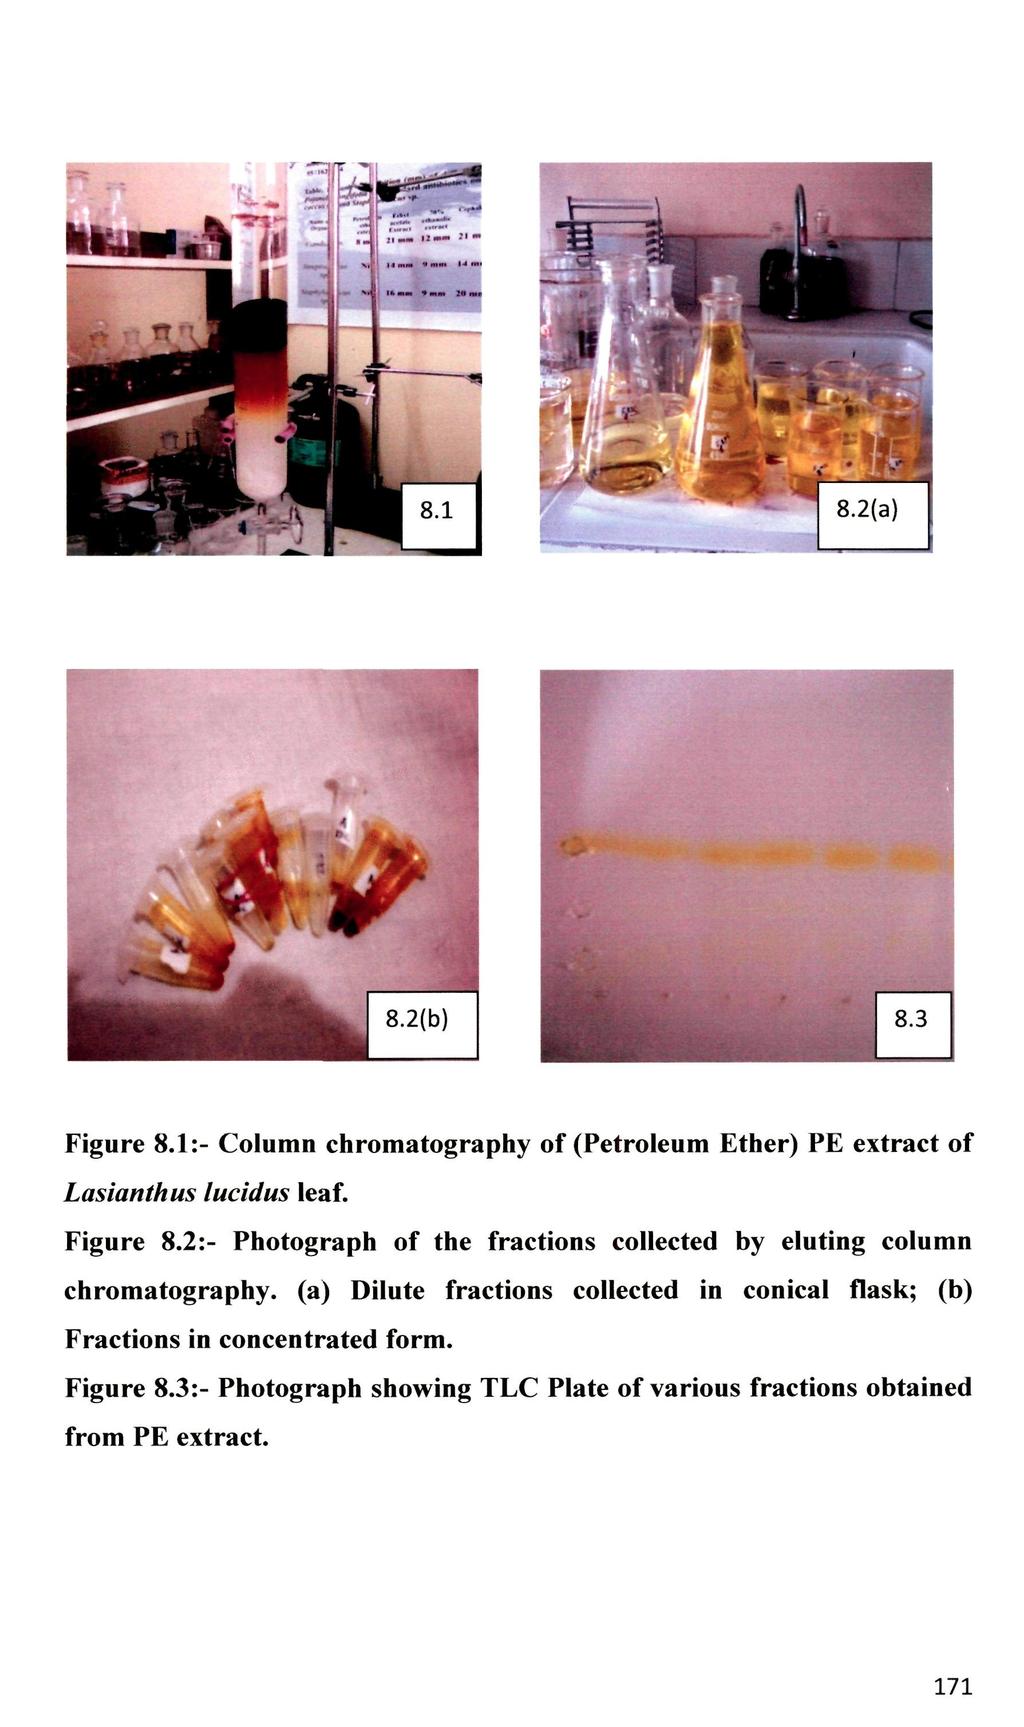 Figure 8.1:- Column chromatography of (Petroleum Ether) PE extract of Lasianthus lucidus leaf. Figure 8.